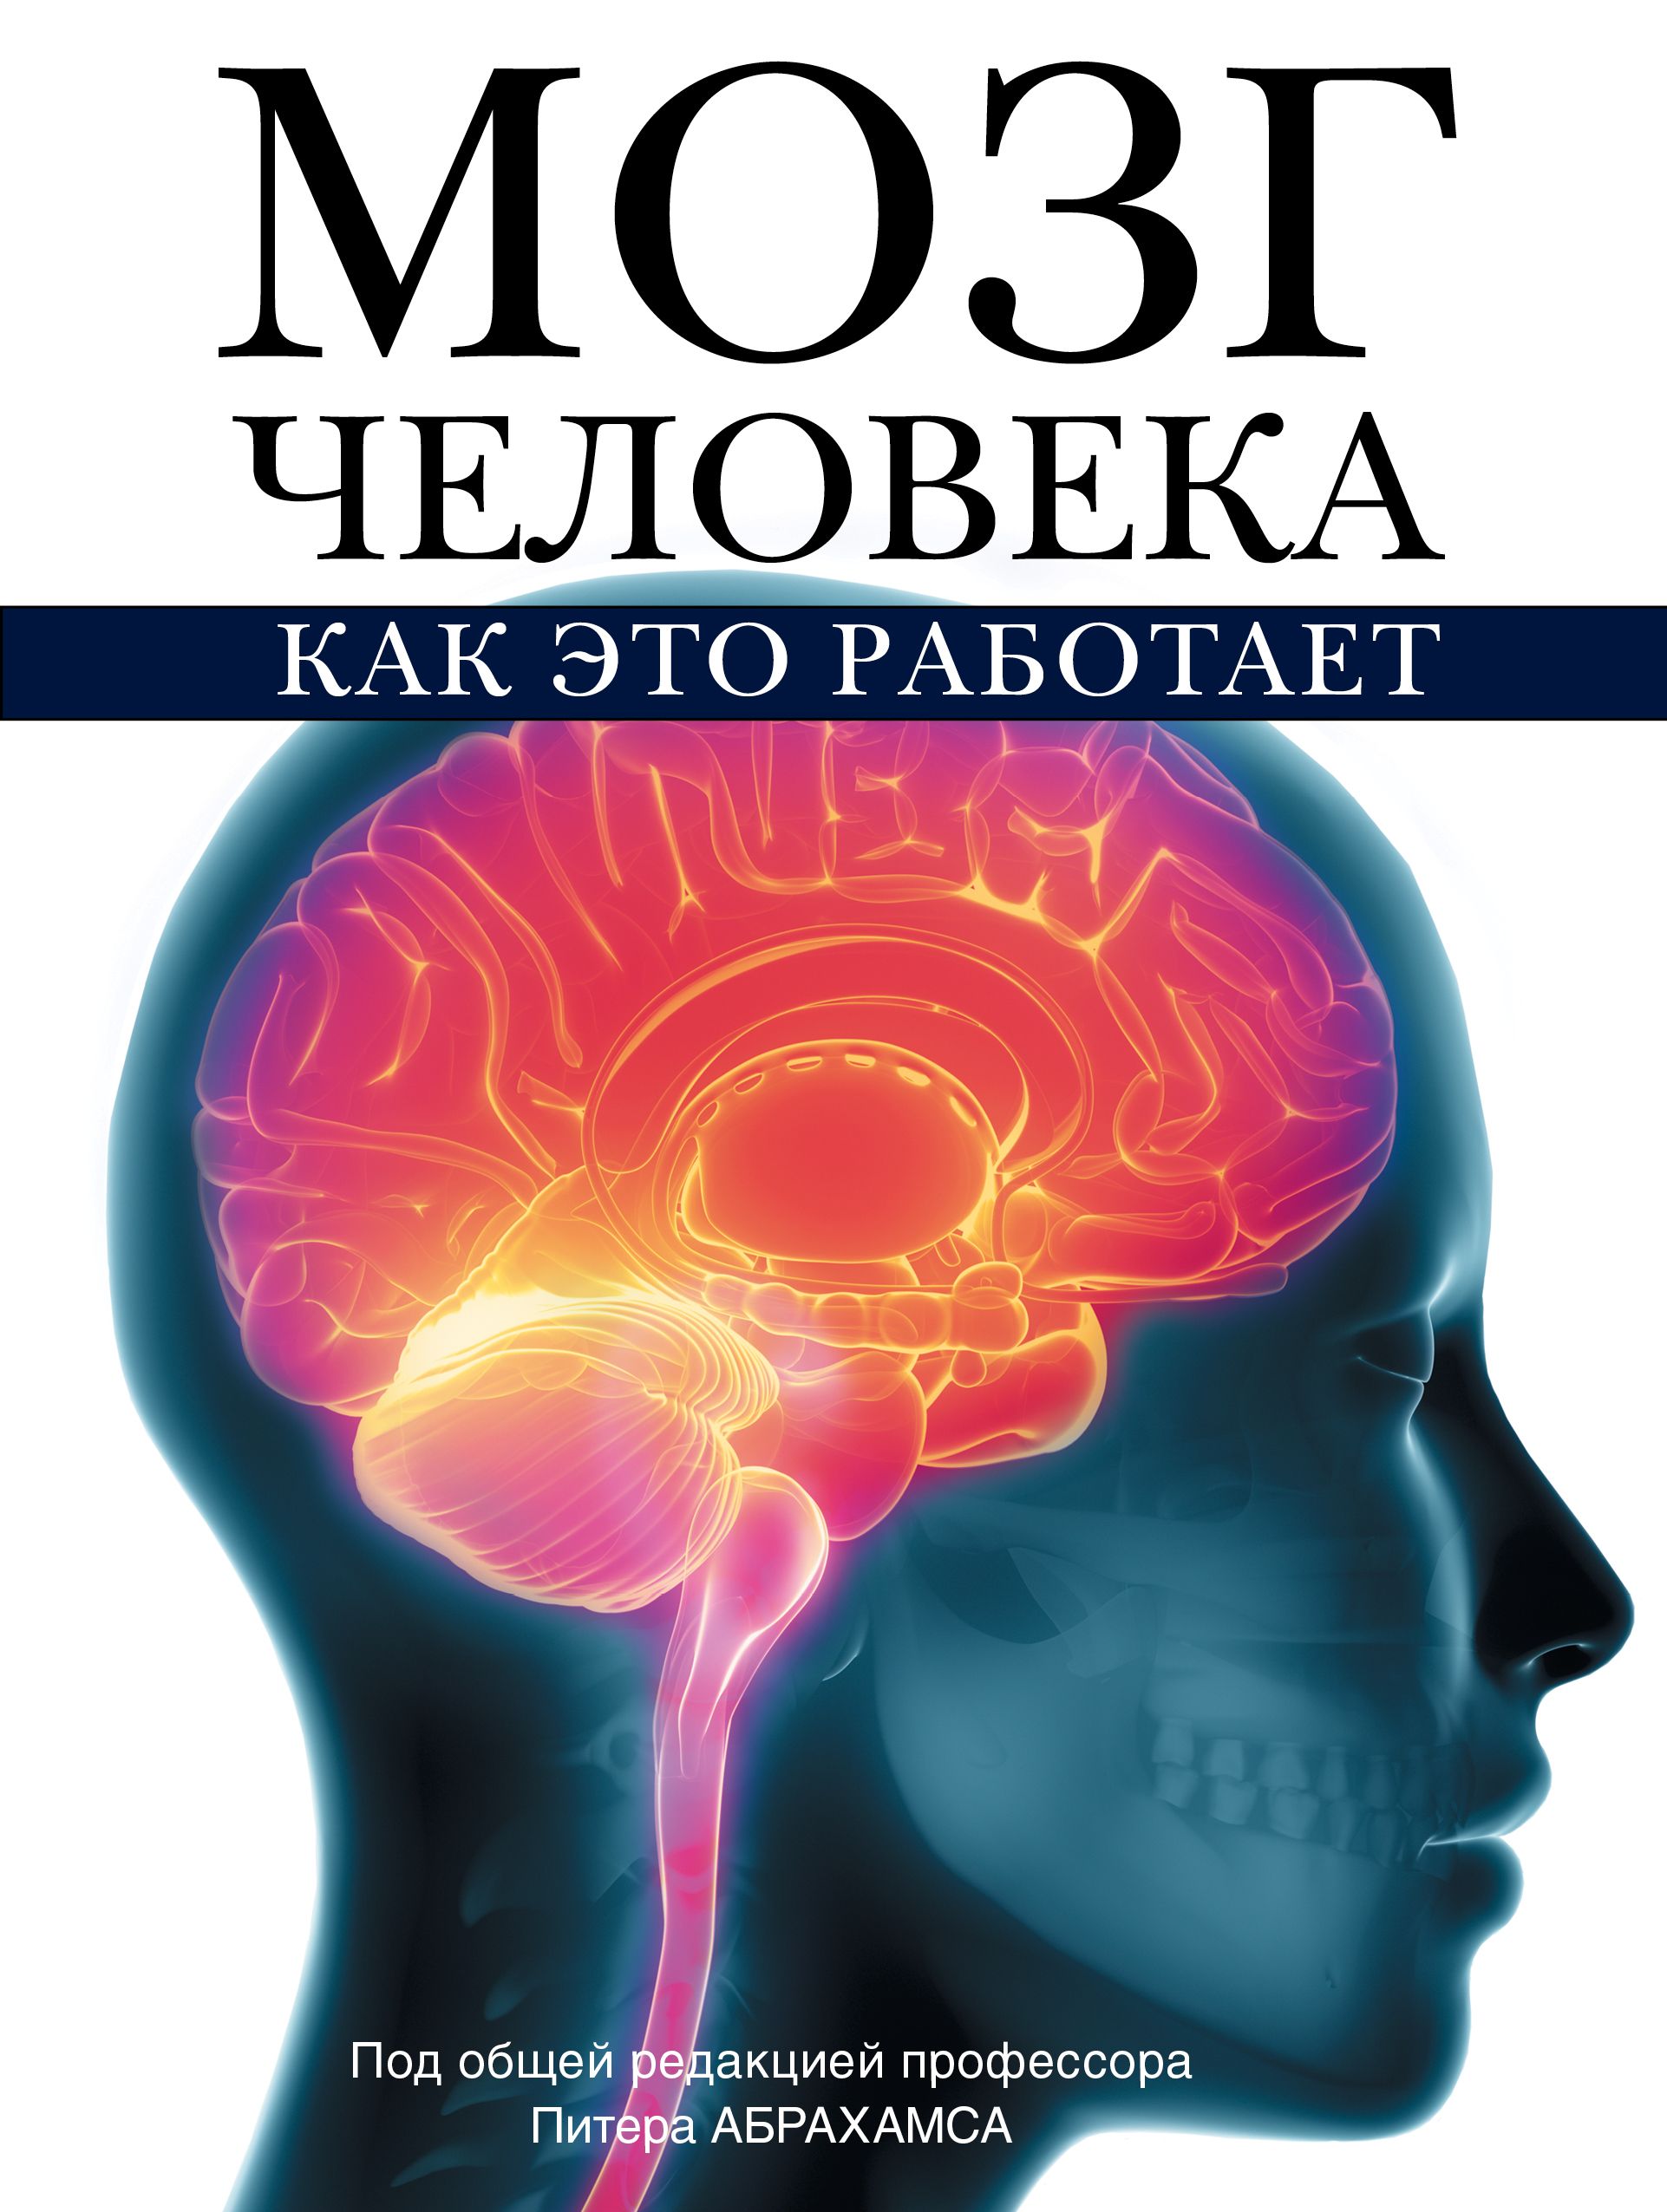 Book brain. Книга мозг. Книга про мозг человека. Мозг с книжкой.